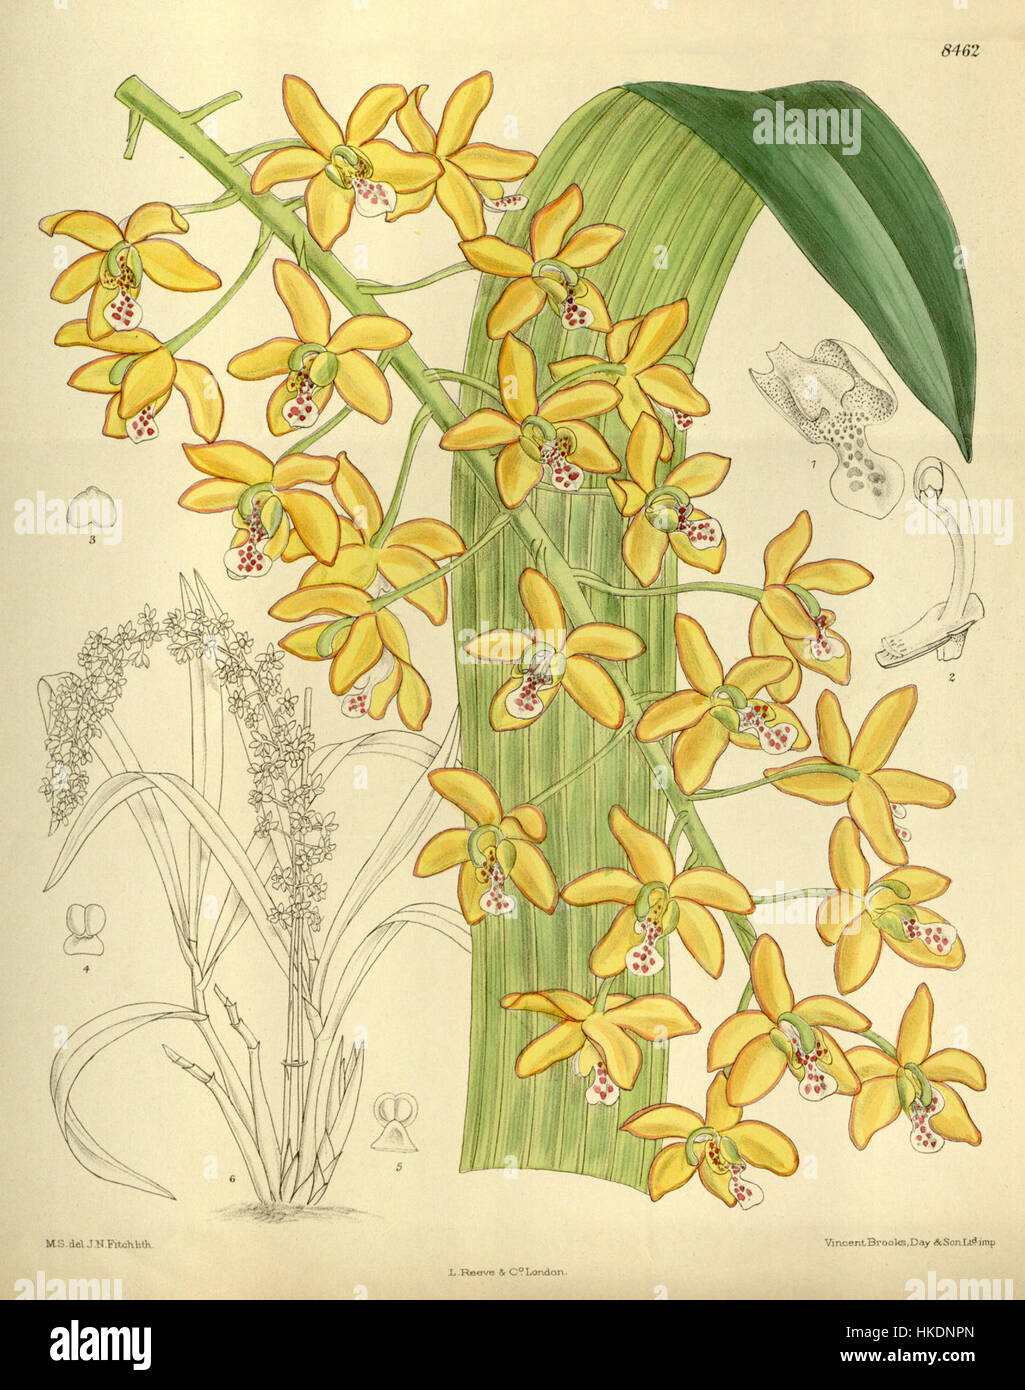 Eriopsis sceptrum (as Eriopsis helenae)   Curtis' 138 (Ser. 4 no. 8) pl. 8462 (1912) Stock Photo